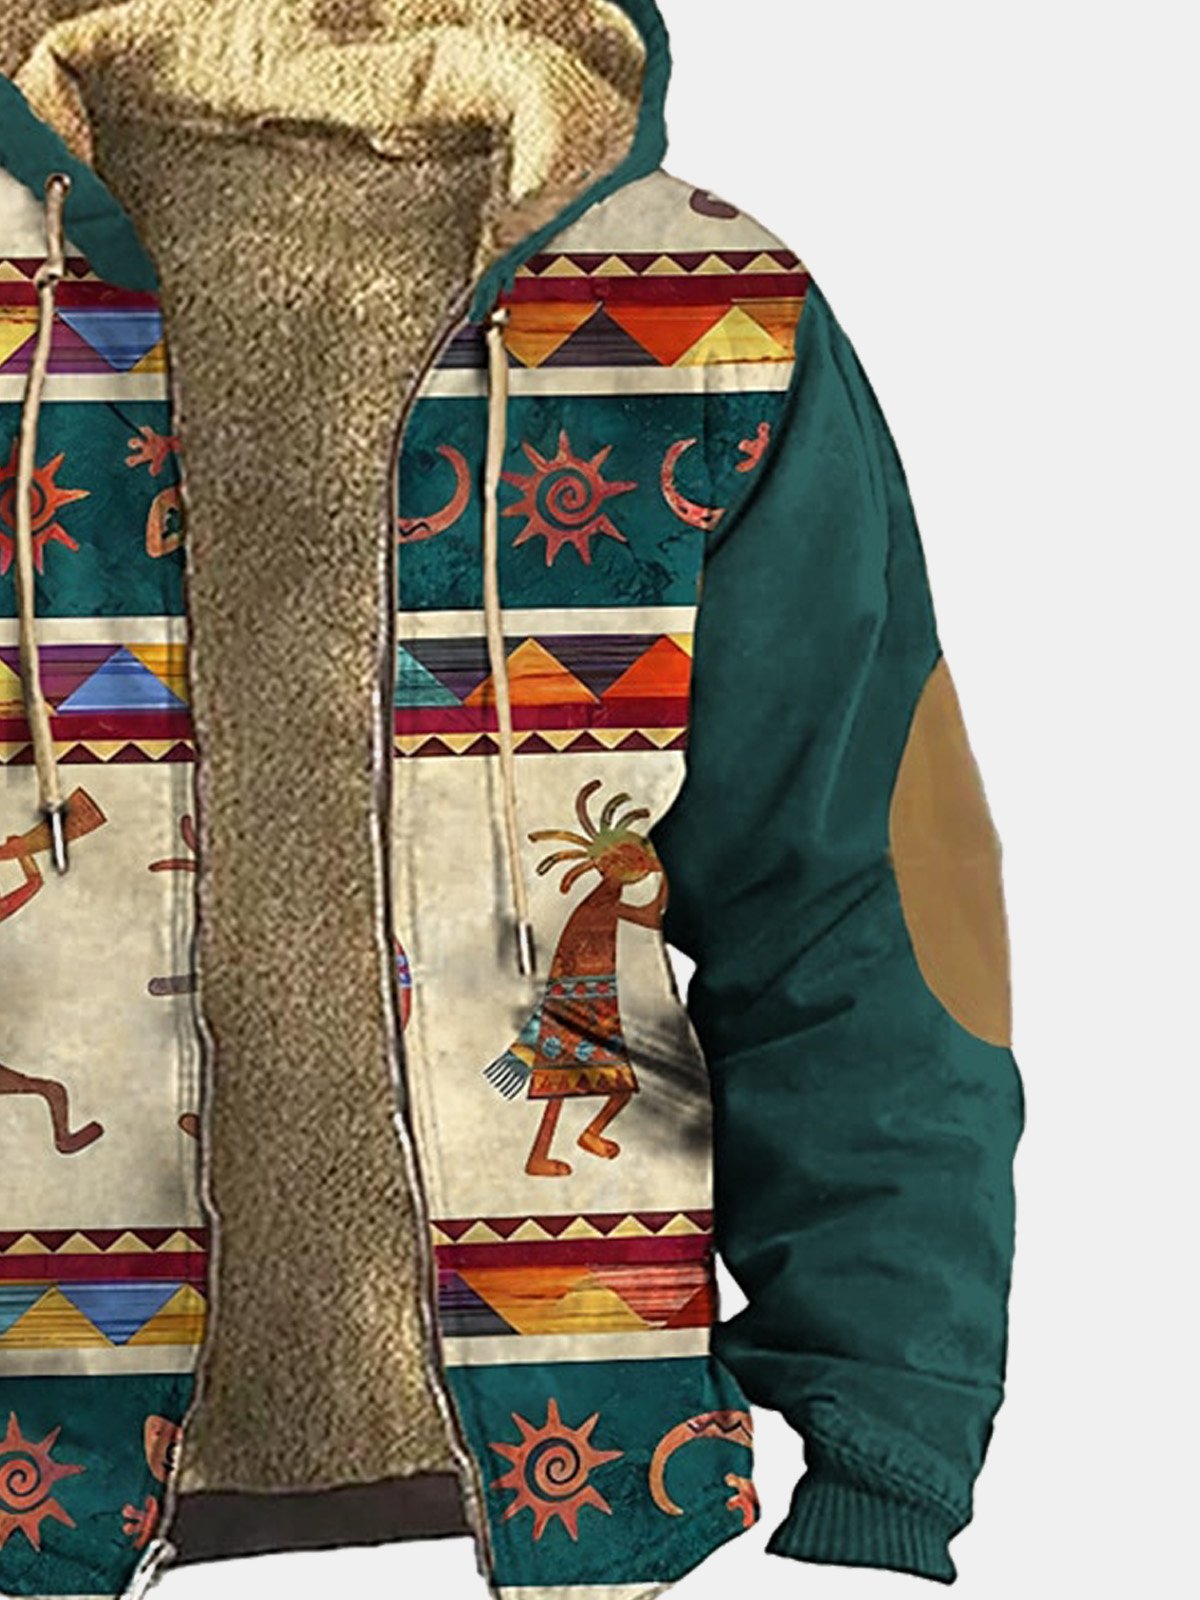 Royaura Vintage Western Cowboy Aztec Fleece Men's Drawstring Hoodies Coat Warm Zip Cardigan Jacket Outwear